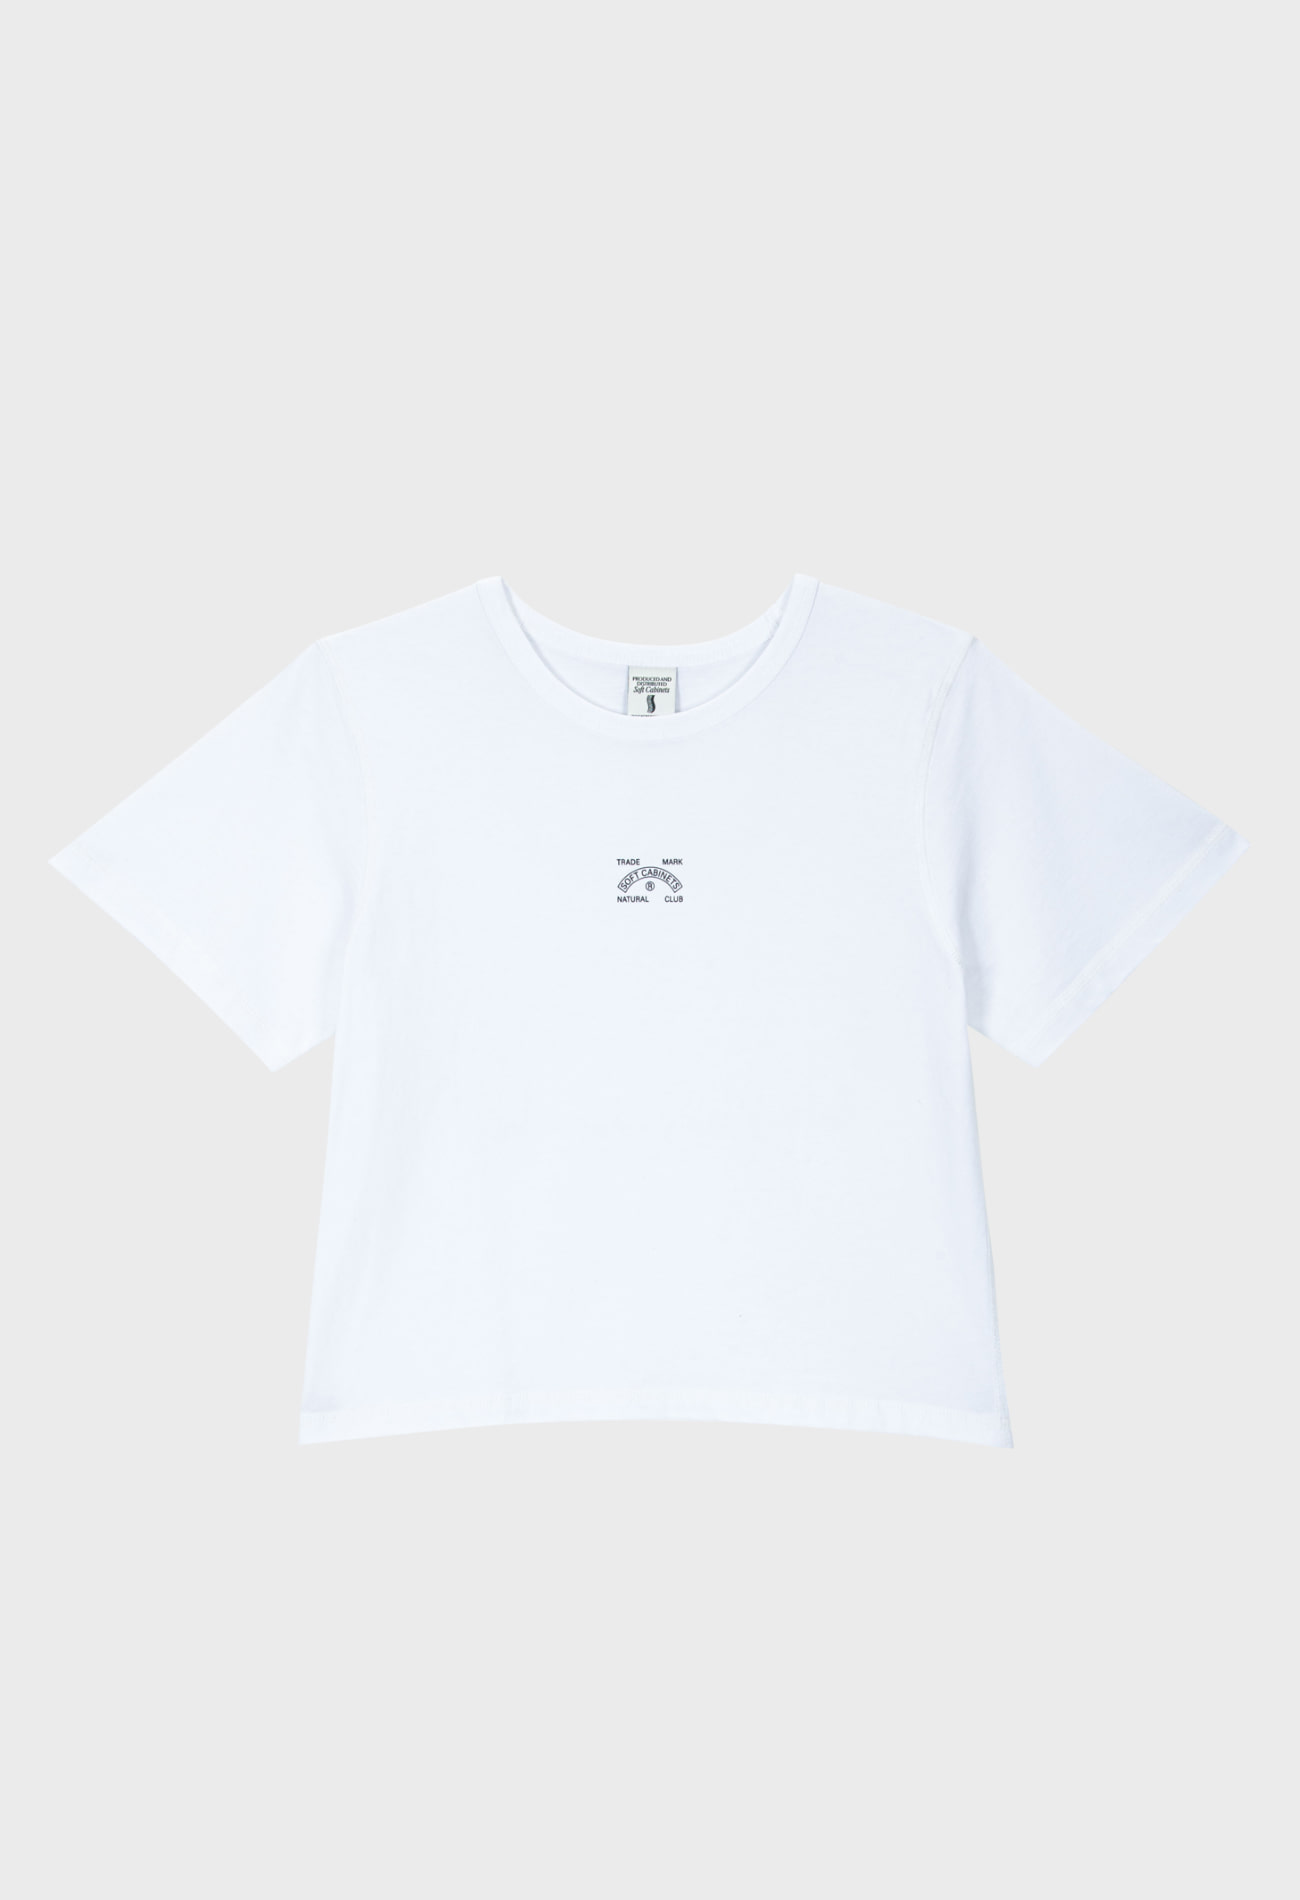 Trade Mark T-shirt White